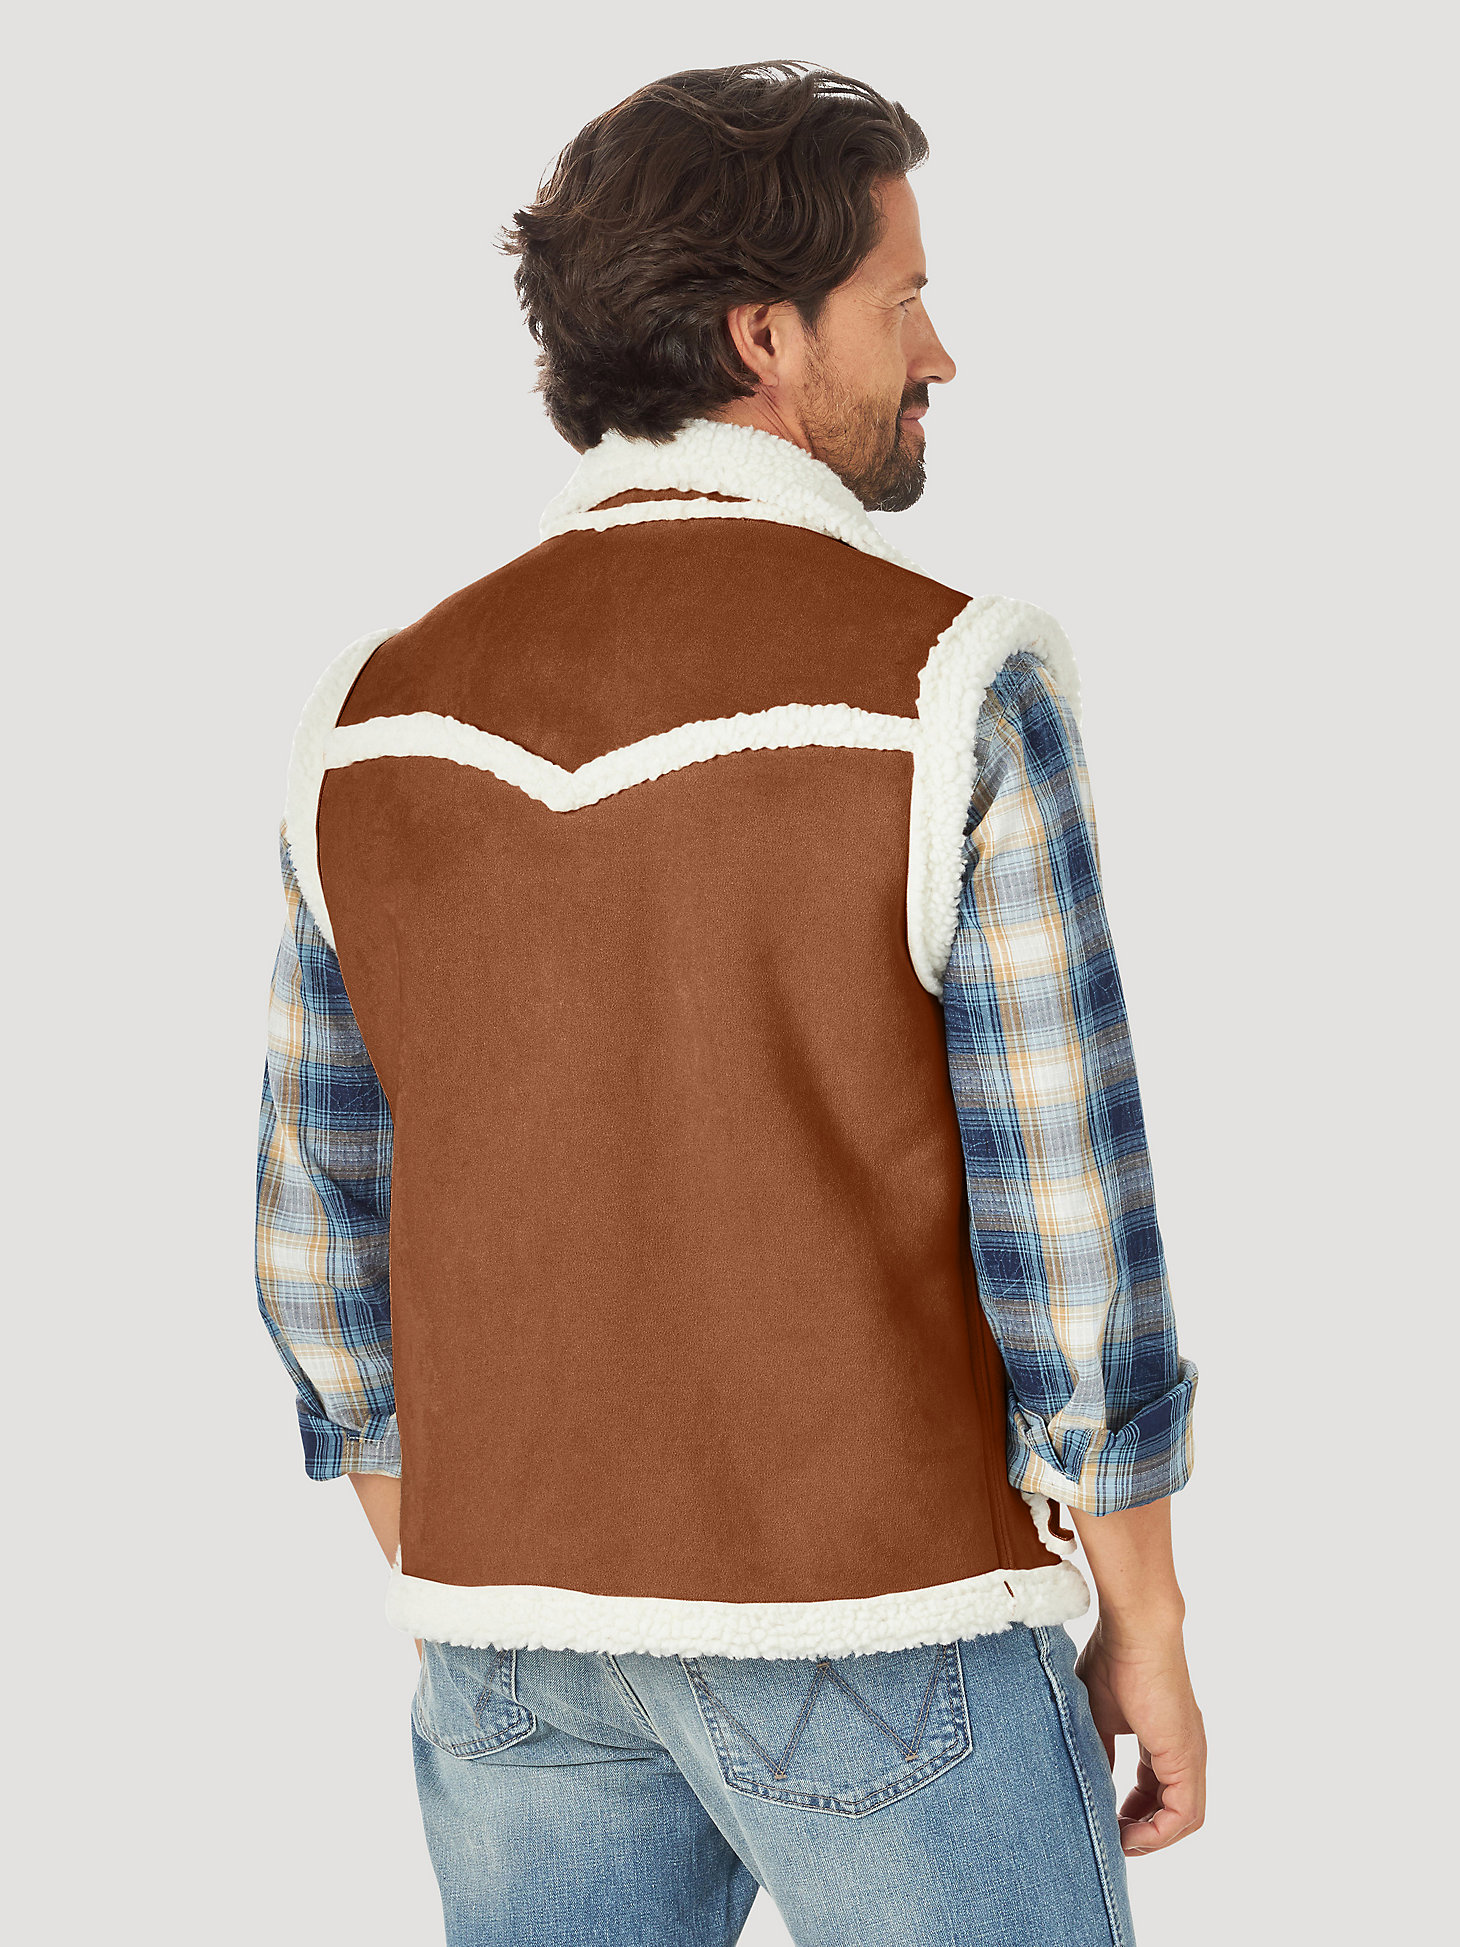 Men's Wrangler Sherpa Lined Contrast Cowboy Vest in Cappuccino alternative view 1